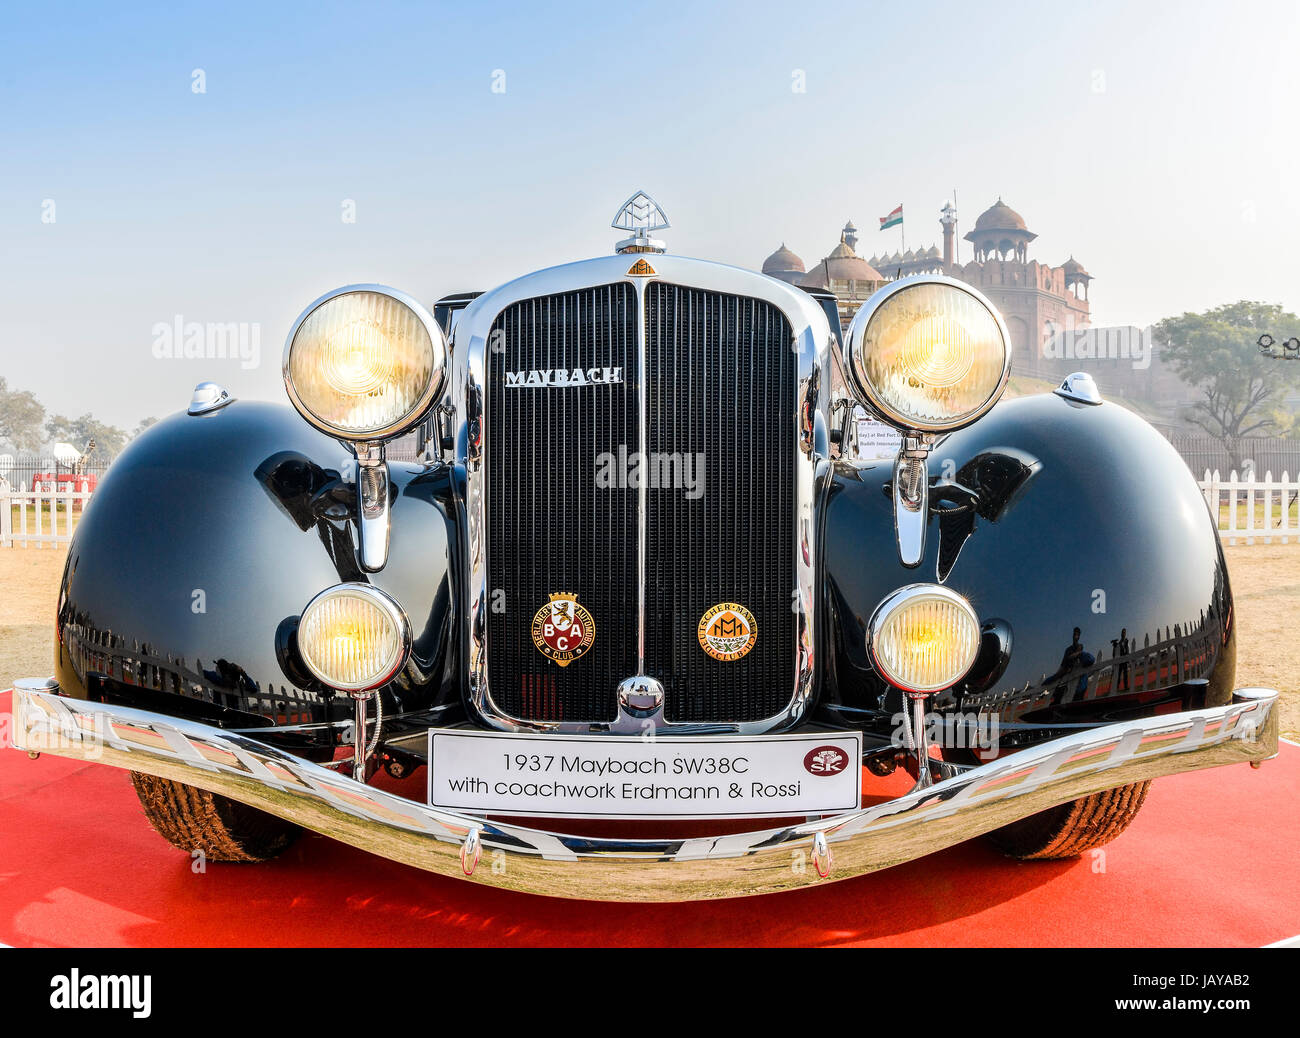 New Delhi, India - Maybach SW38C (1937 model) on display at the 21 Gun Salute International Vintage Car Rally 2016 at Red Fort, New Delhi. Stock Photo